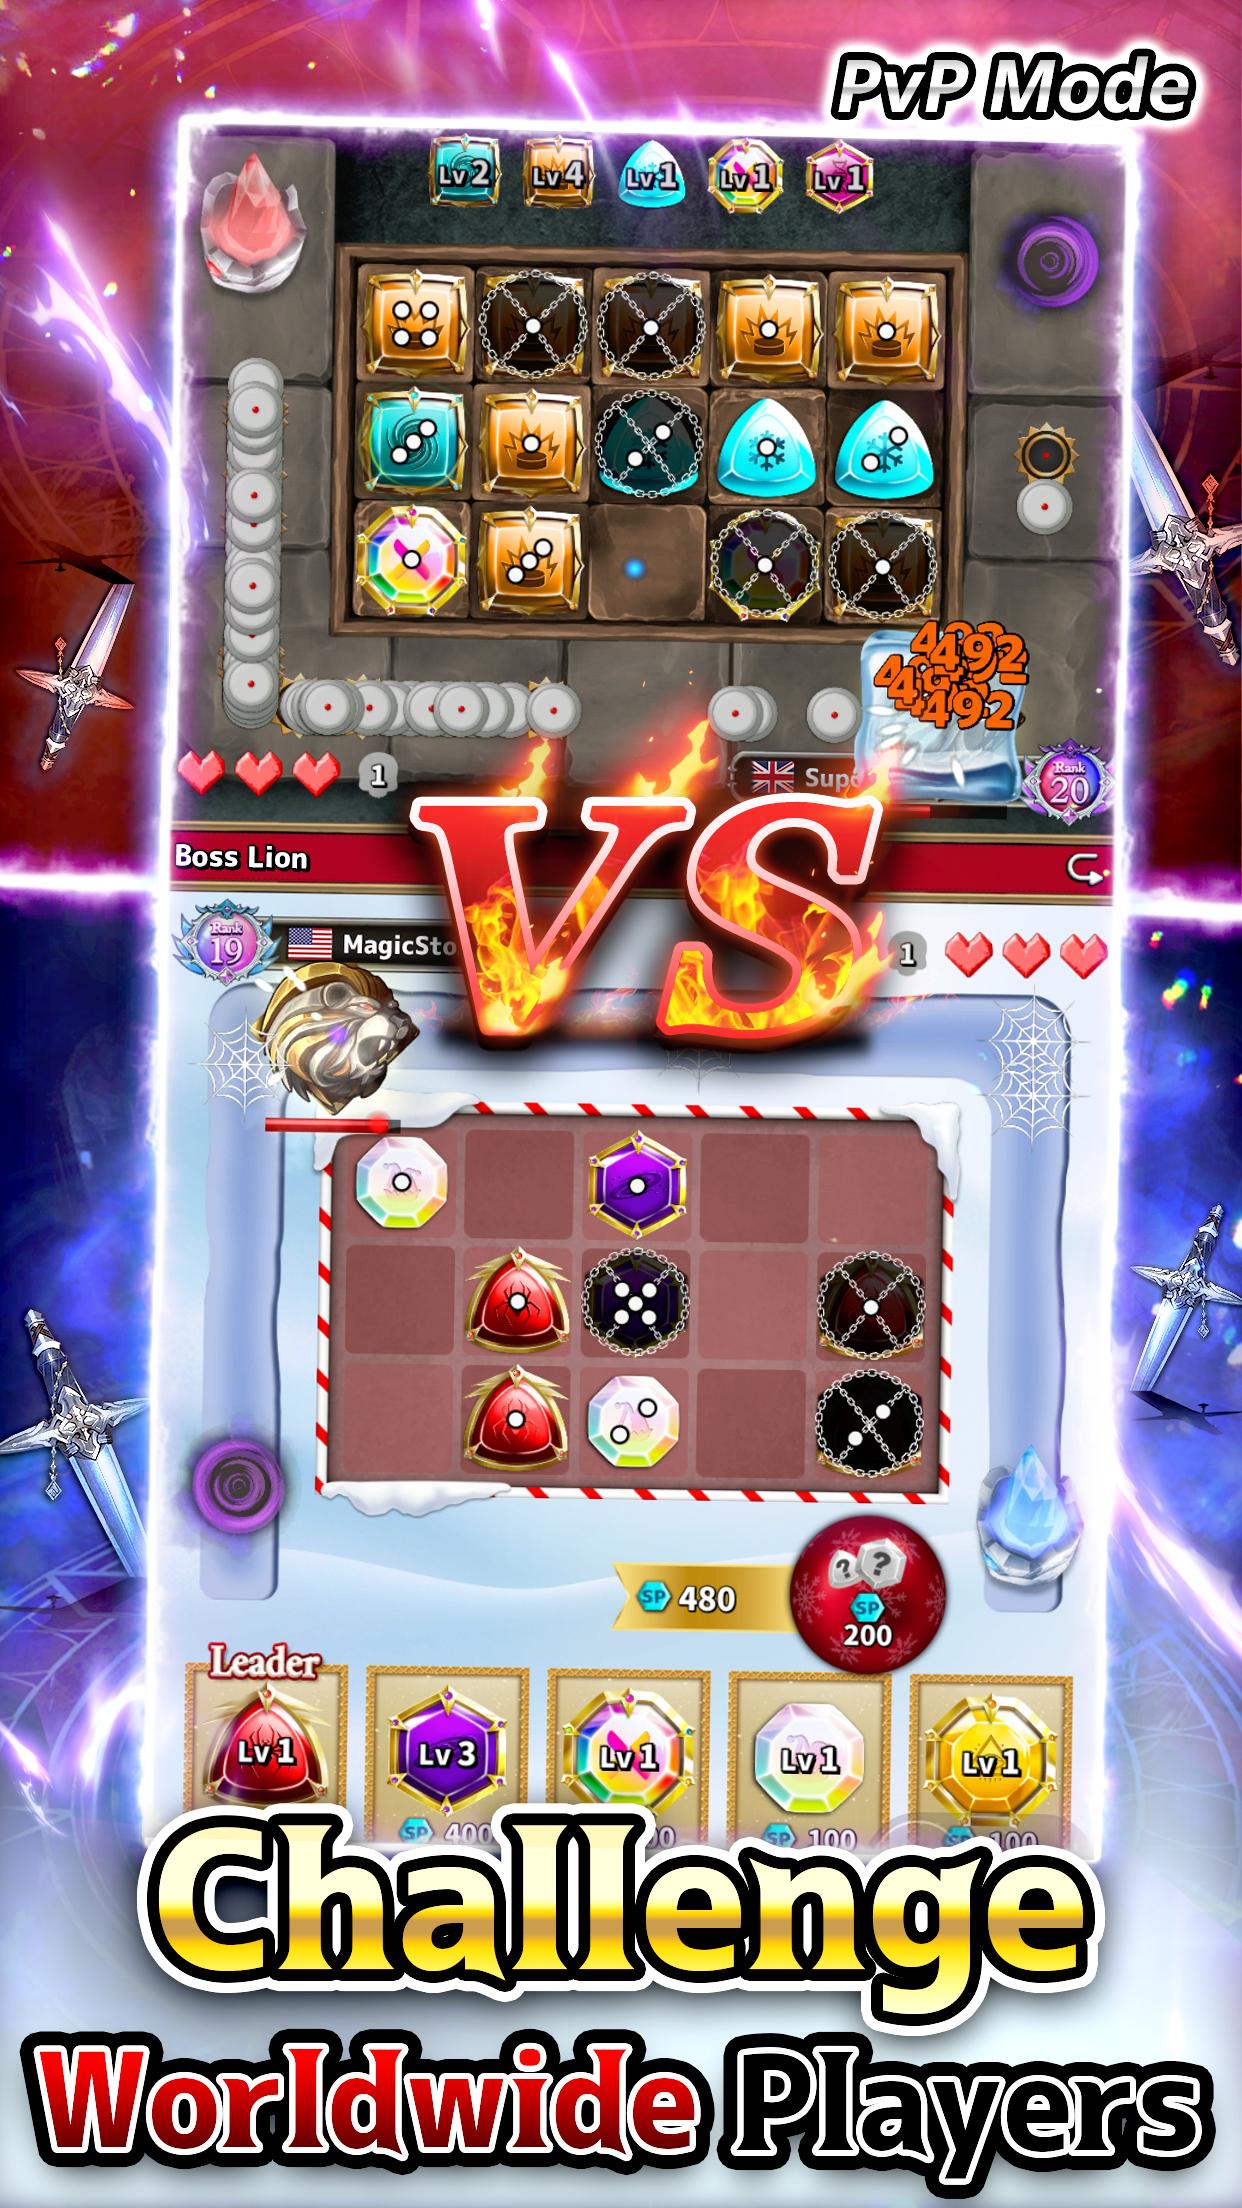 Magic Stone Arena Random PvP Tower Defense Game 1.29.0 Screenshot 19